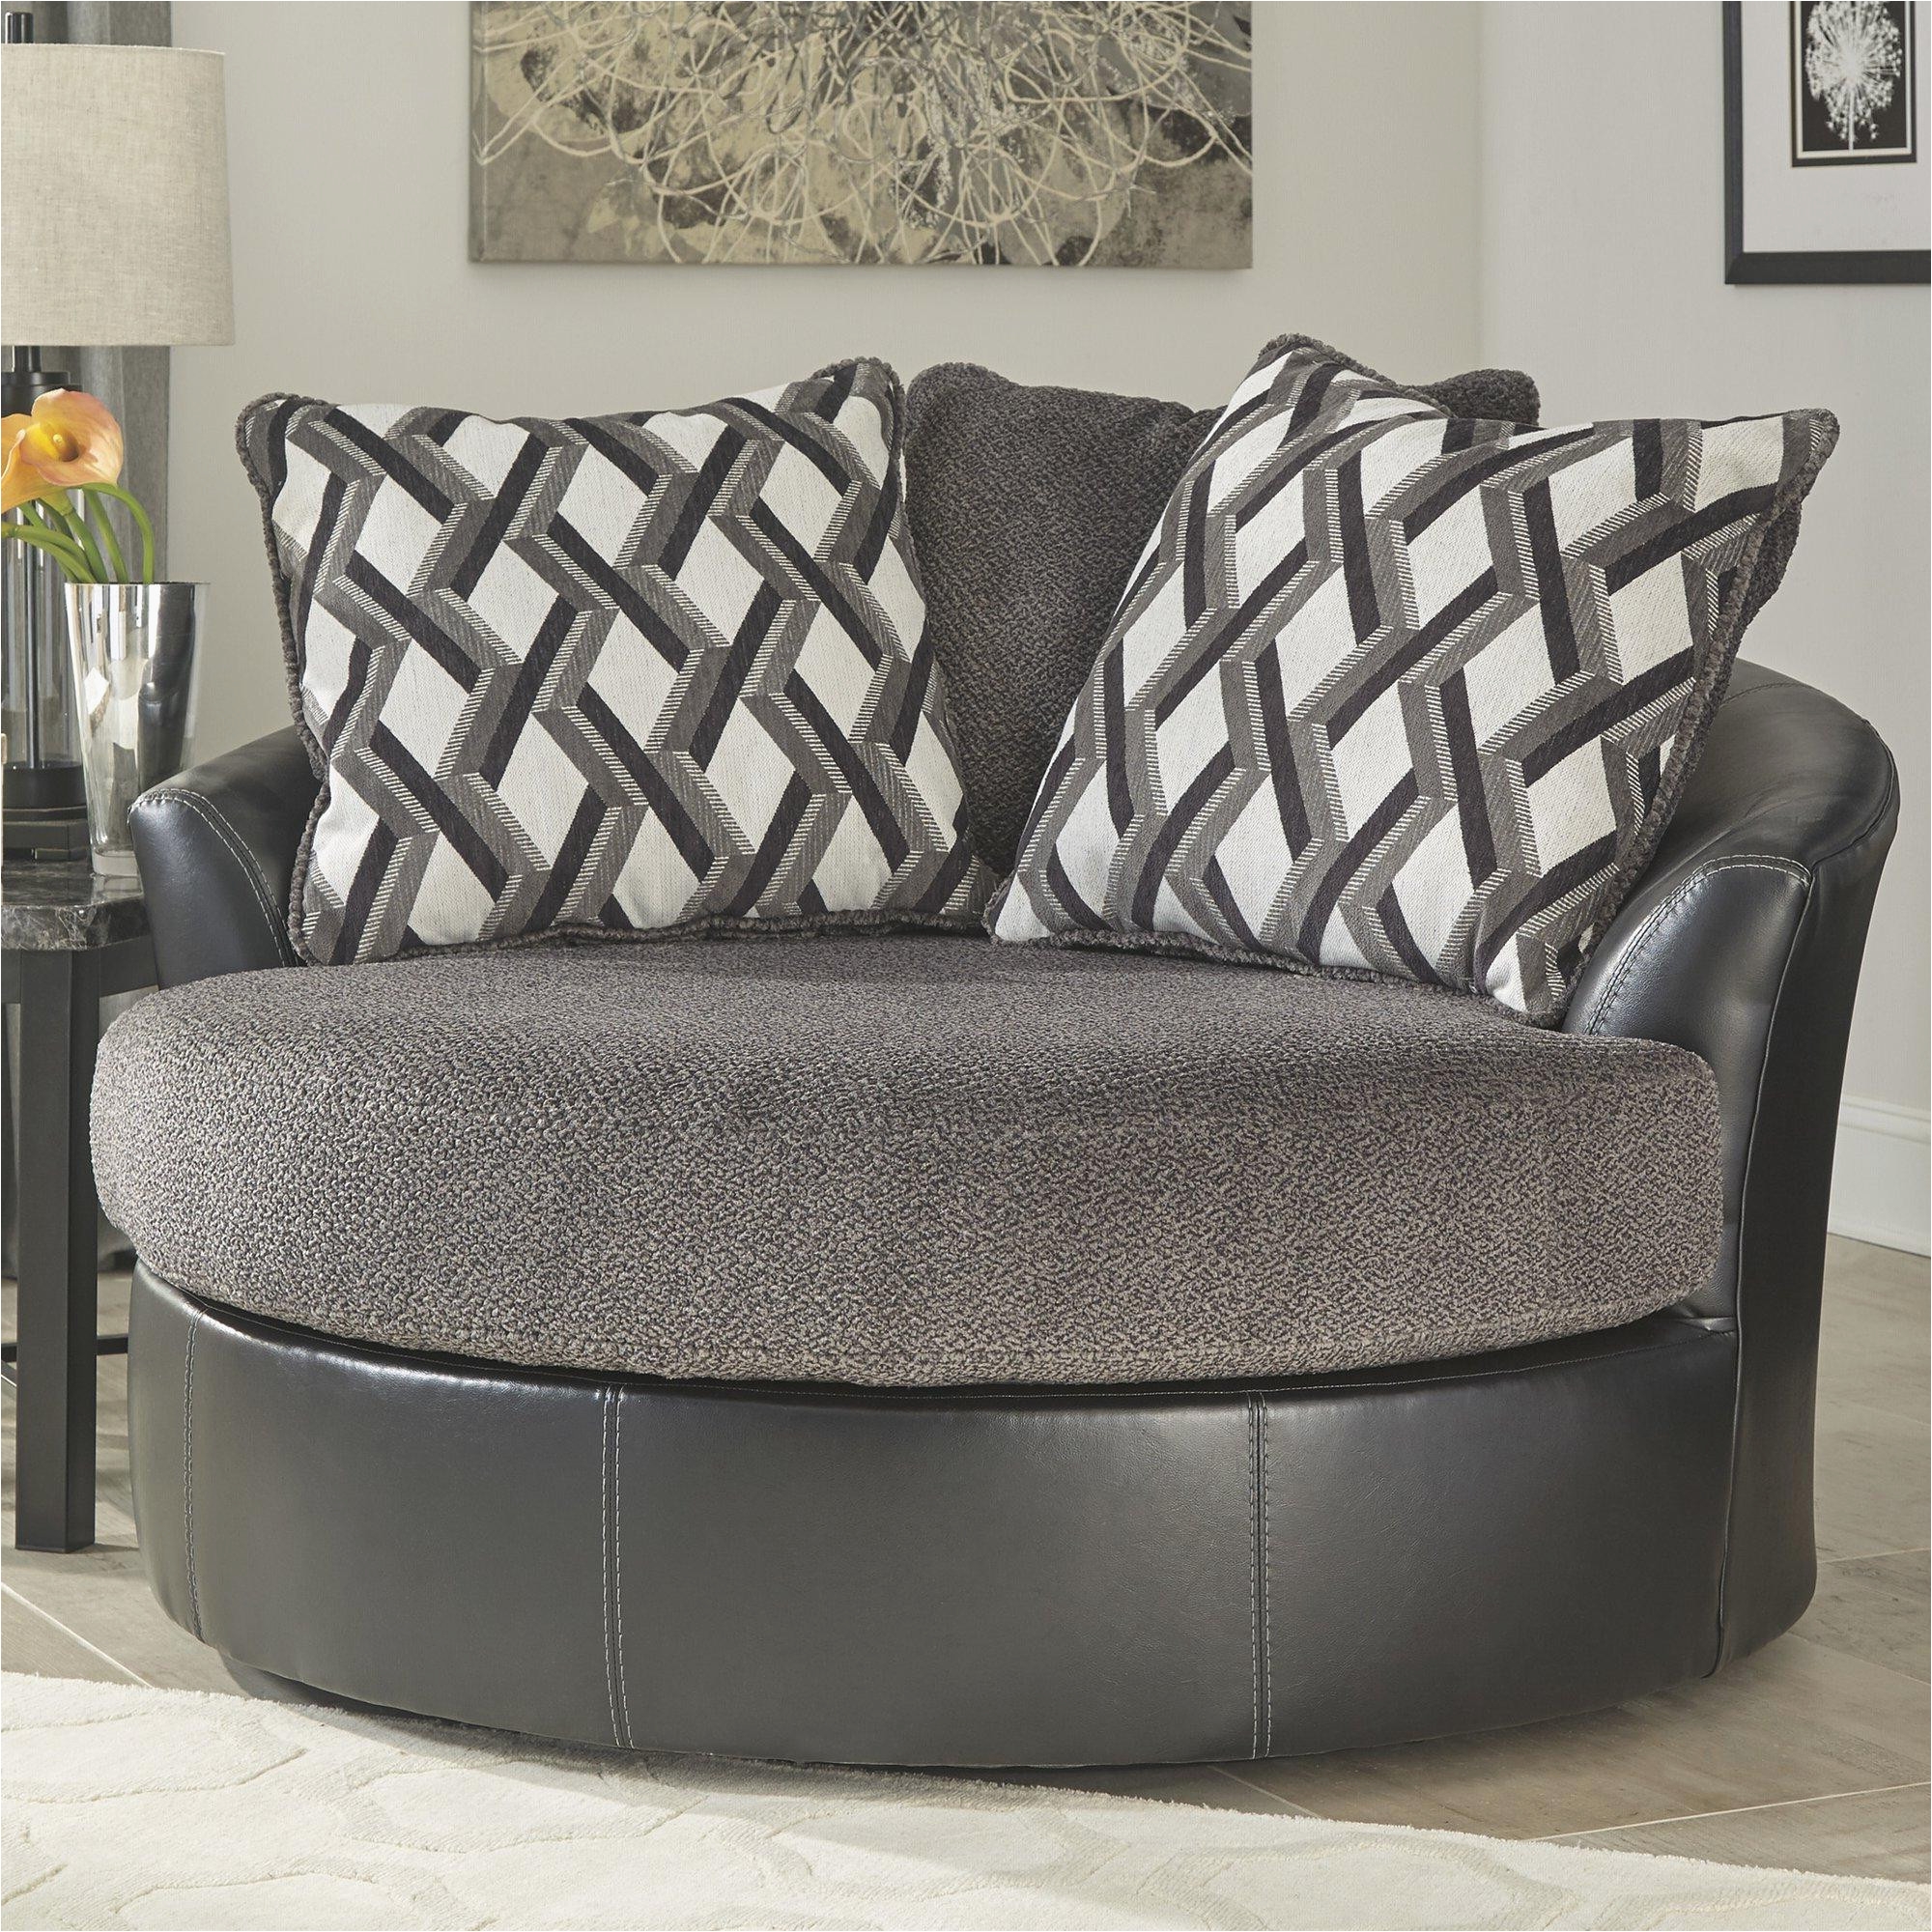 inspirational high end sofas manufacturers furniture wayfair outdoor sofa marvelousf wicker outdoor sofa 0d